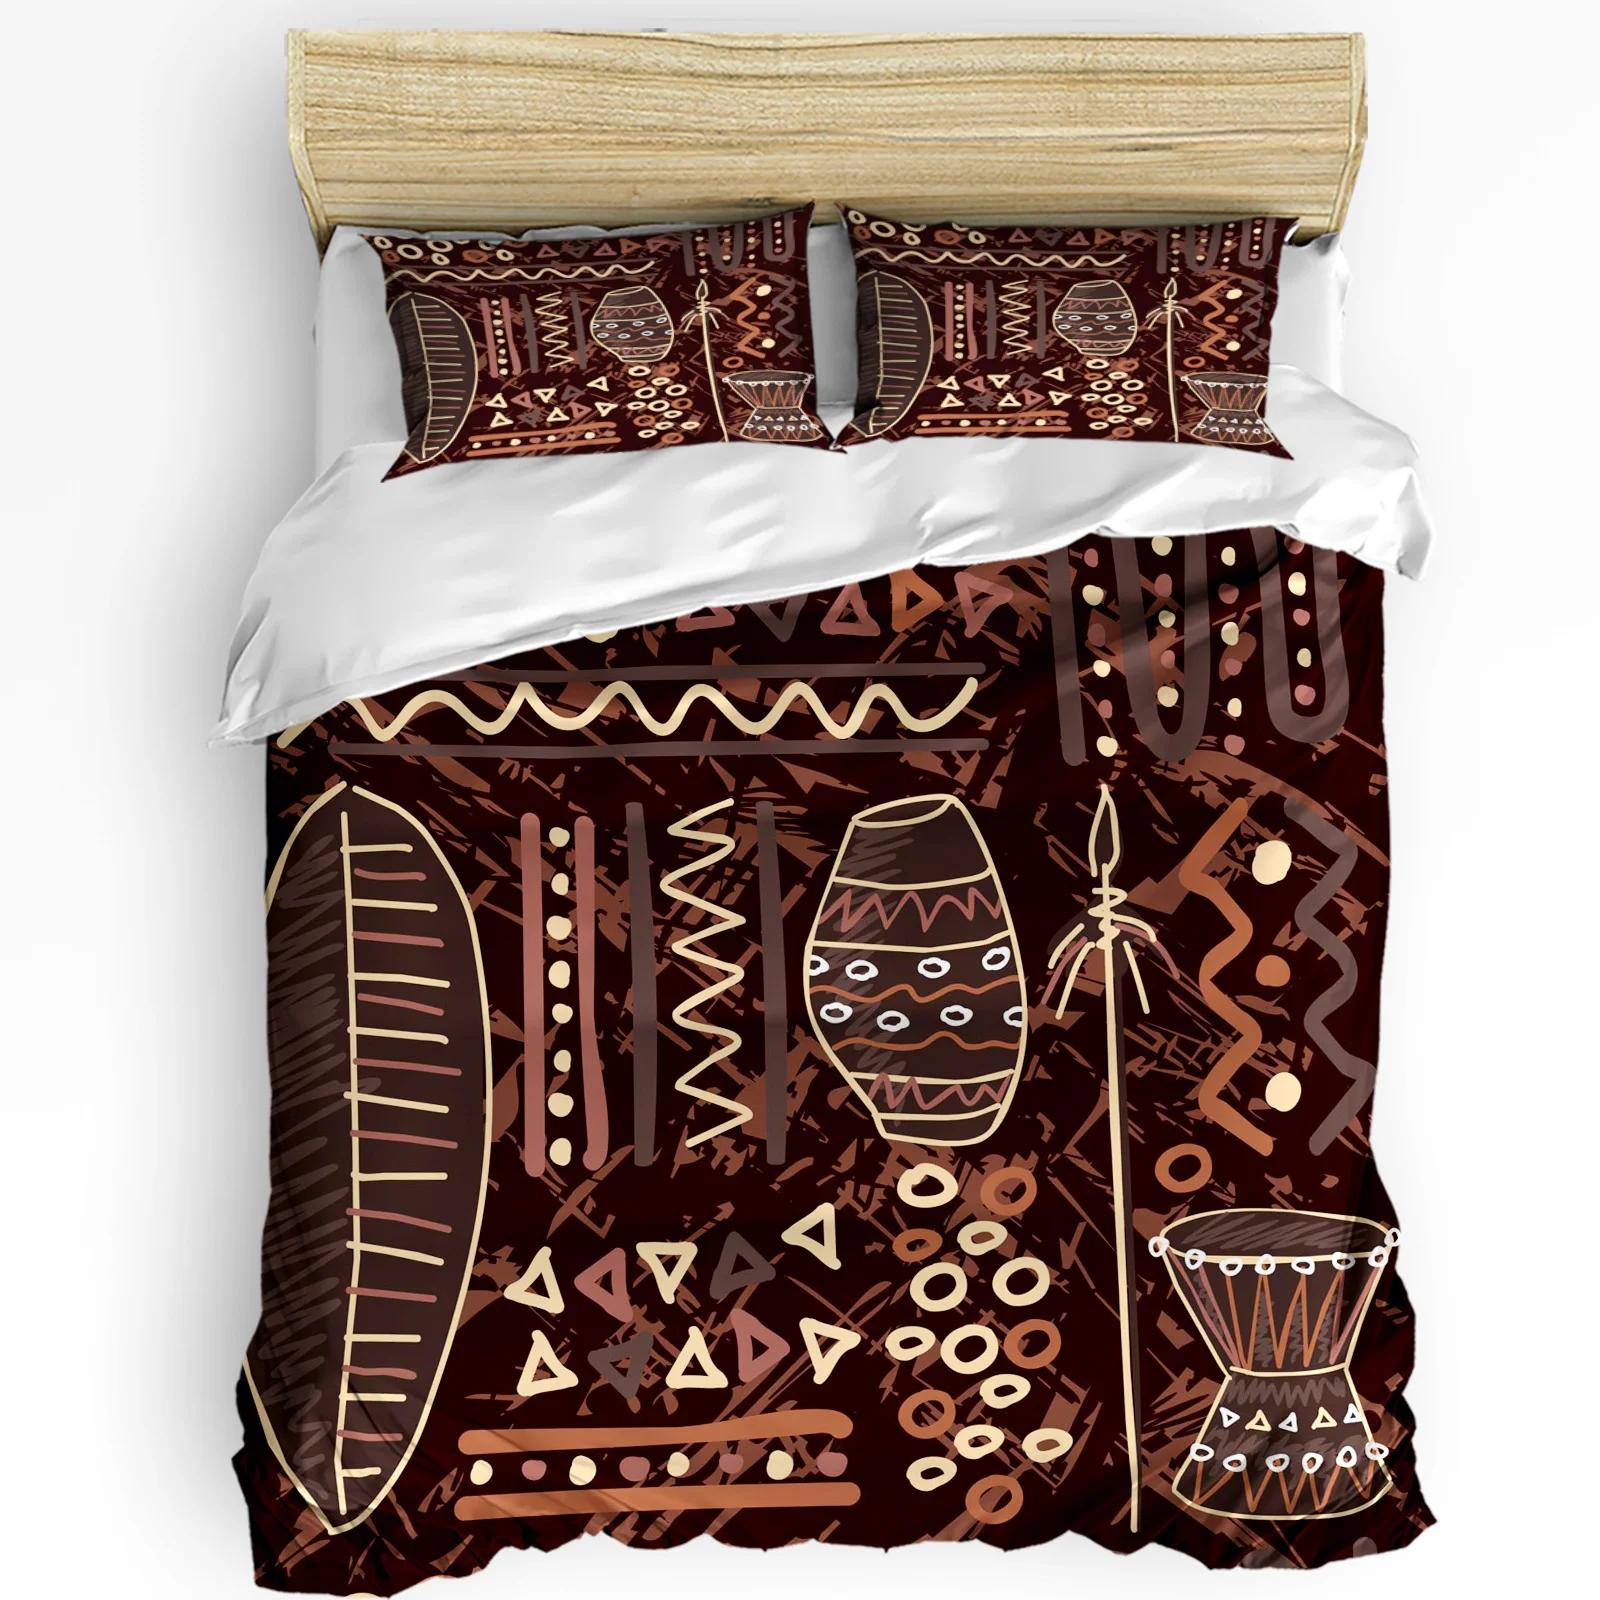 

Africa Tribal Geometric Art Printed Comfort Duvet Cover Pillow Case Home Textile Quilt Cover Boy Kid Teen Girl 3pcs Bedding Set